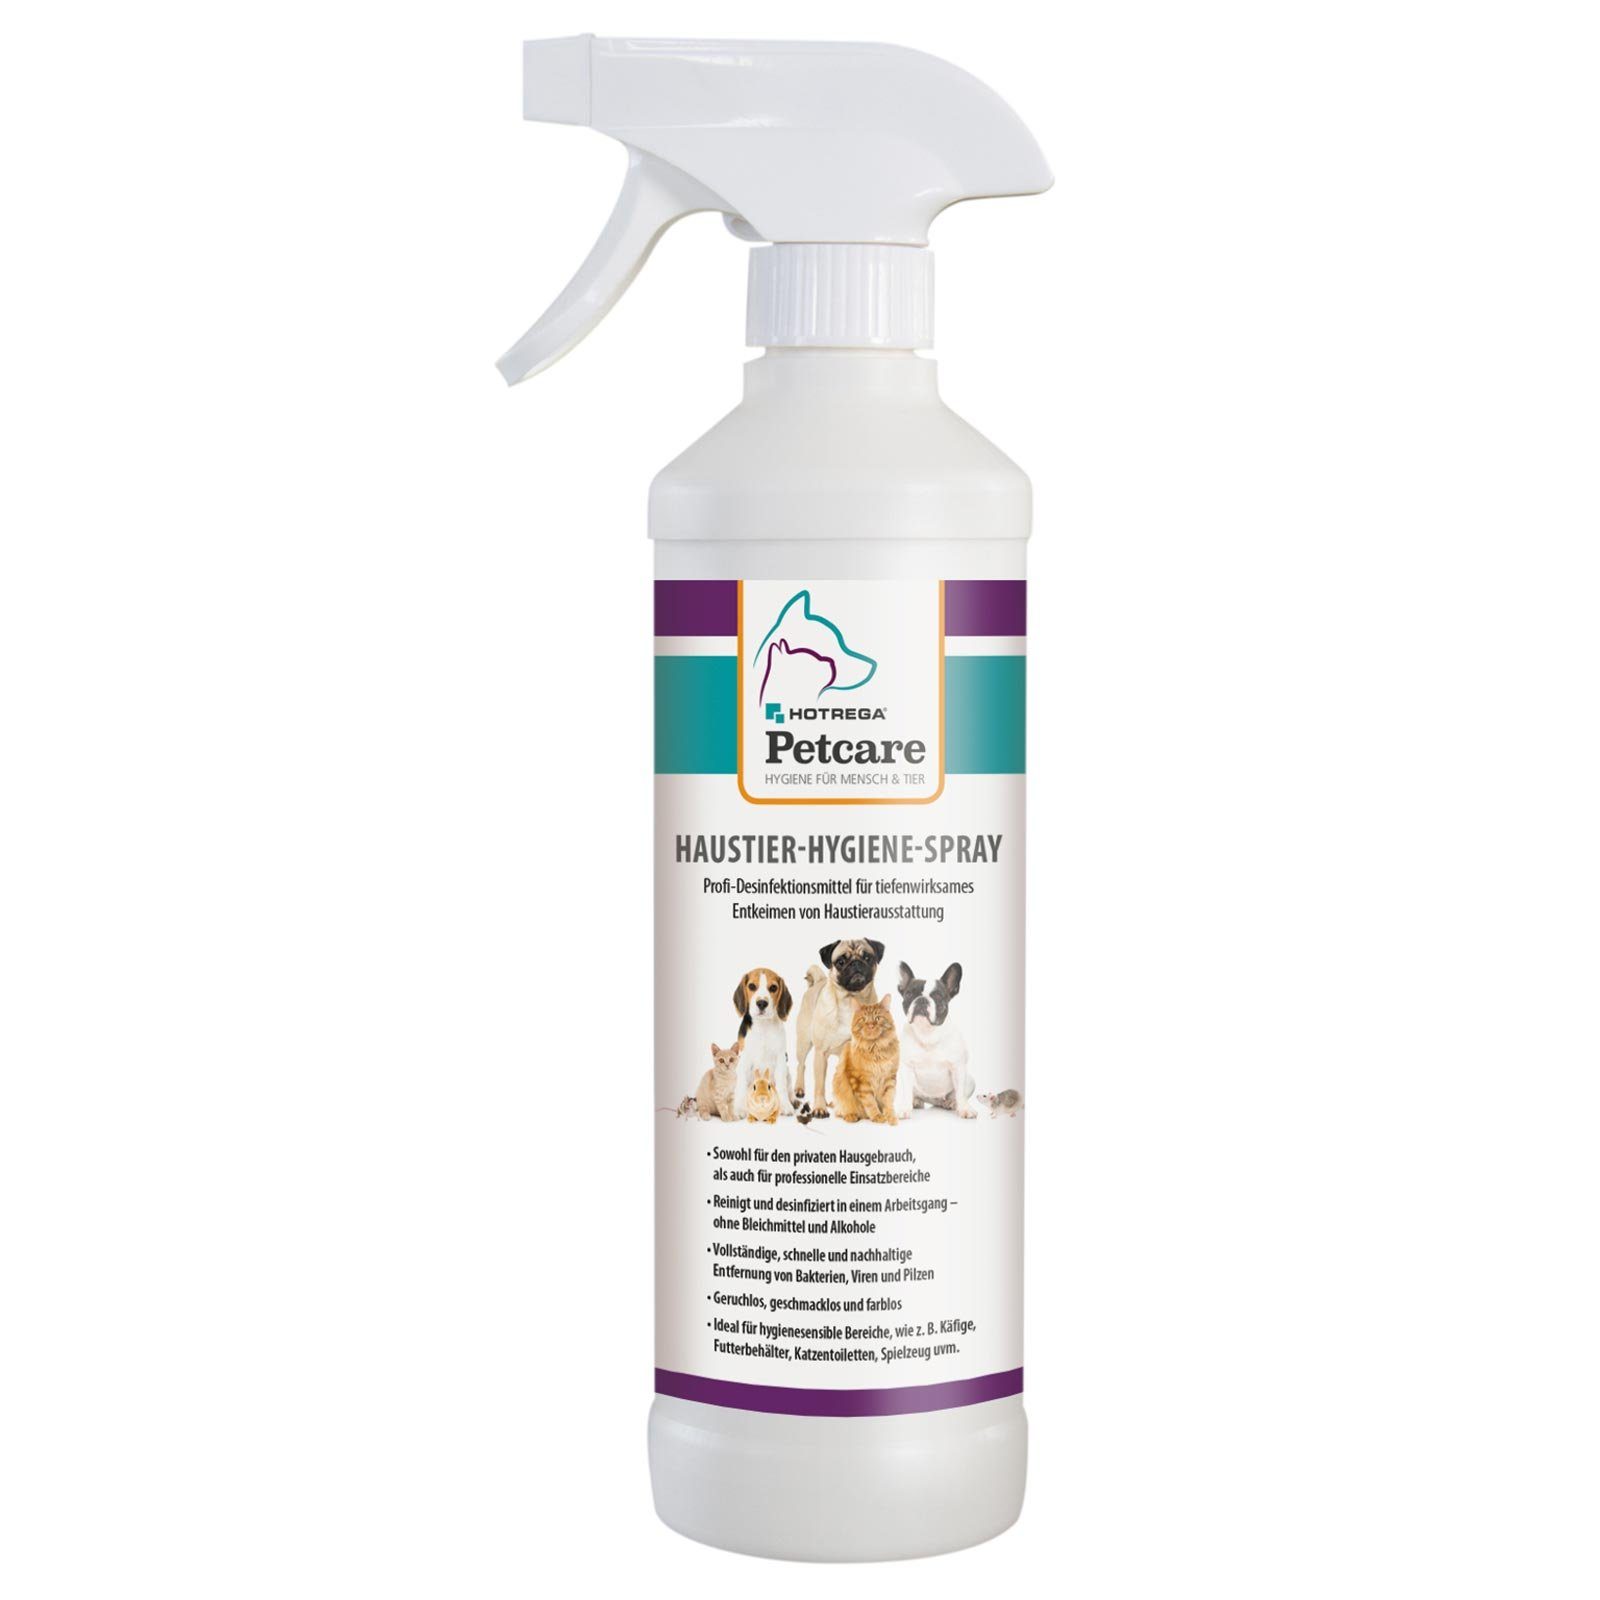 Haustier-Hygiene-Spray Universalreiniger Petcare ml 500 HOTREGA®